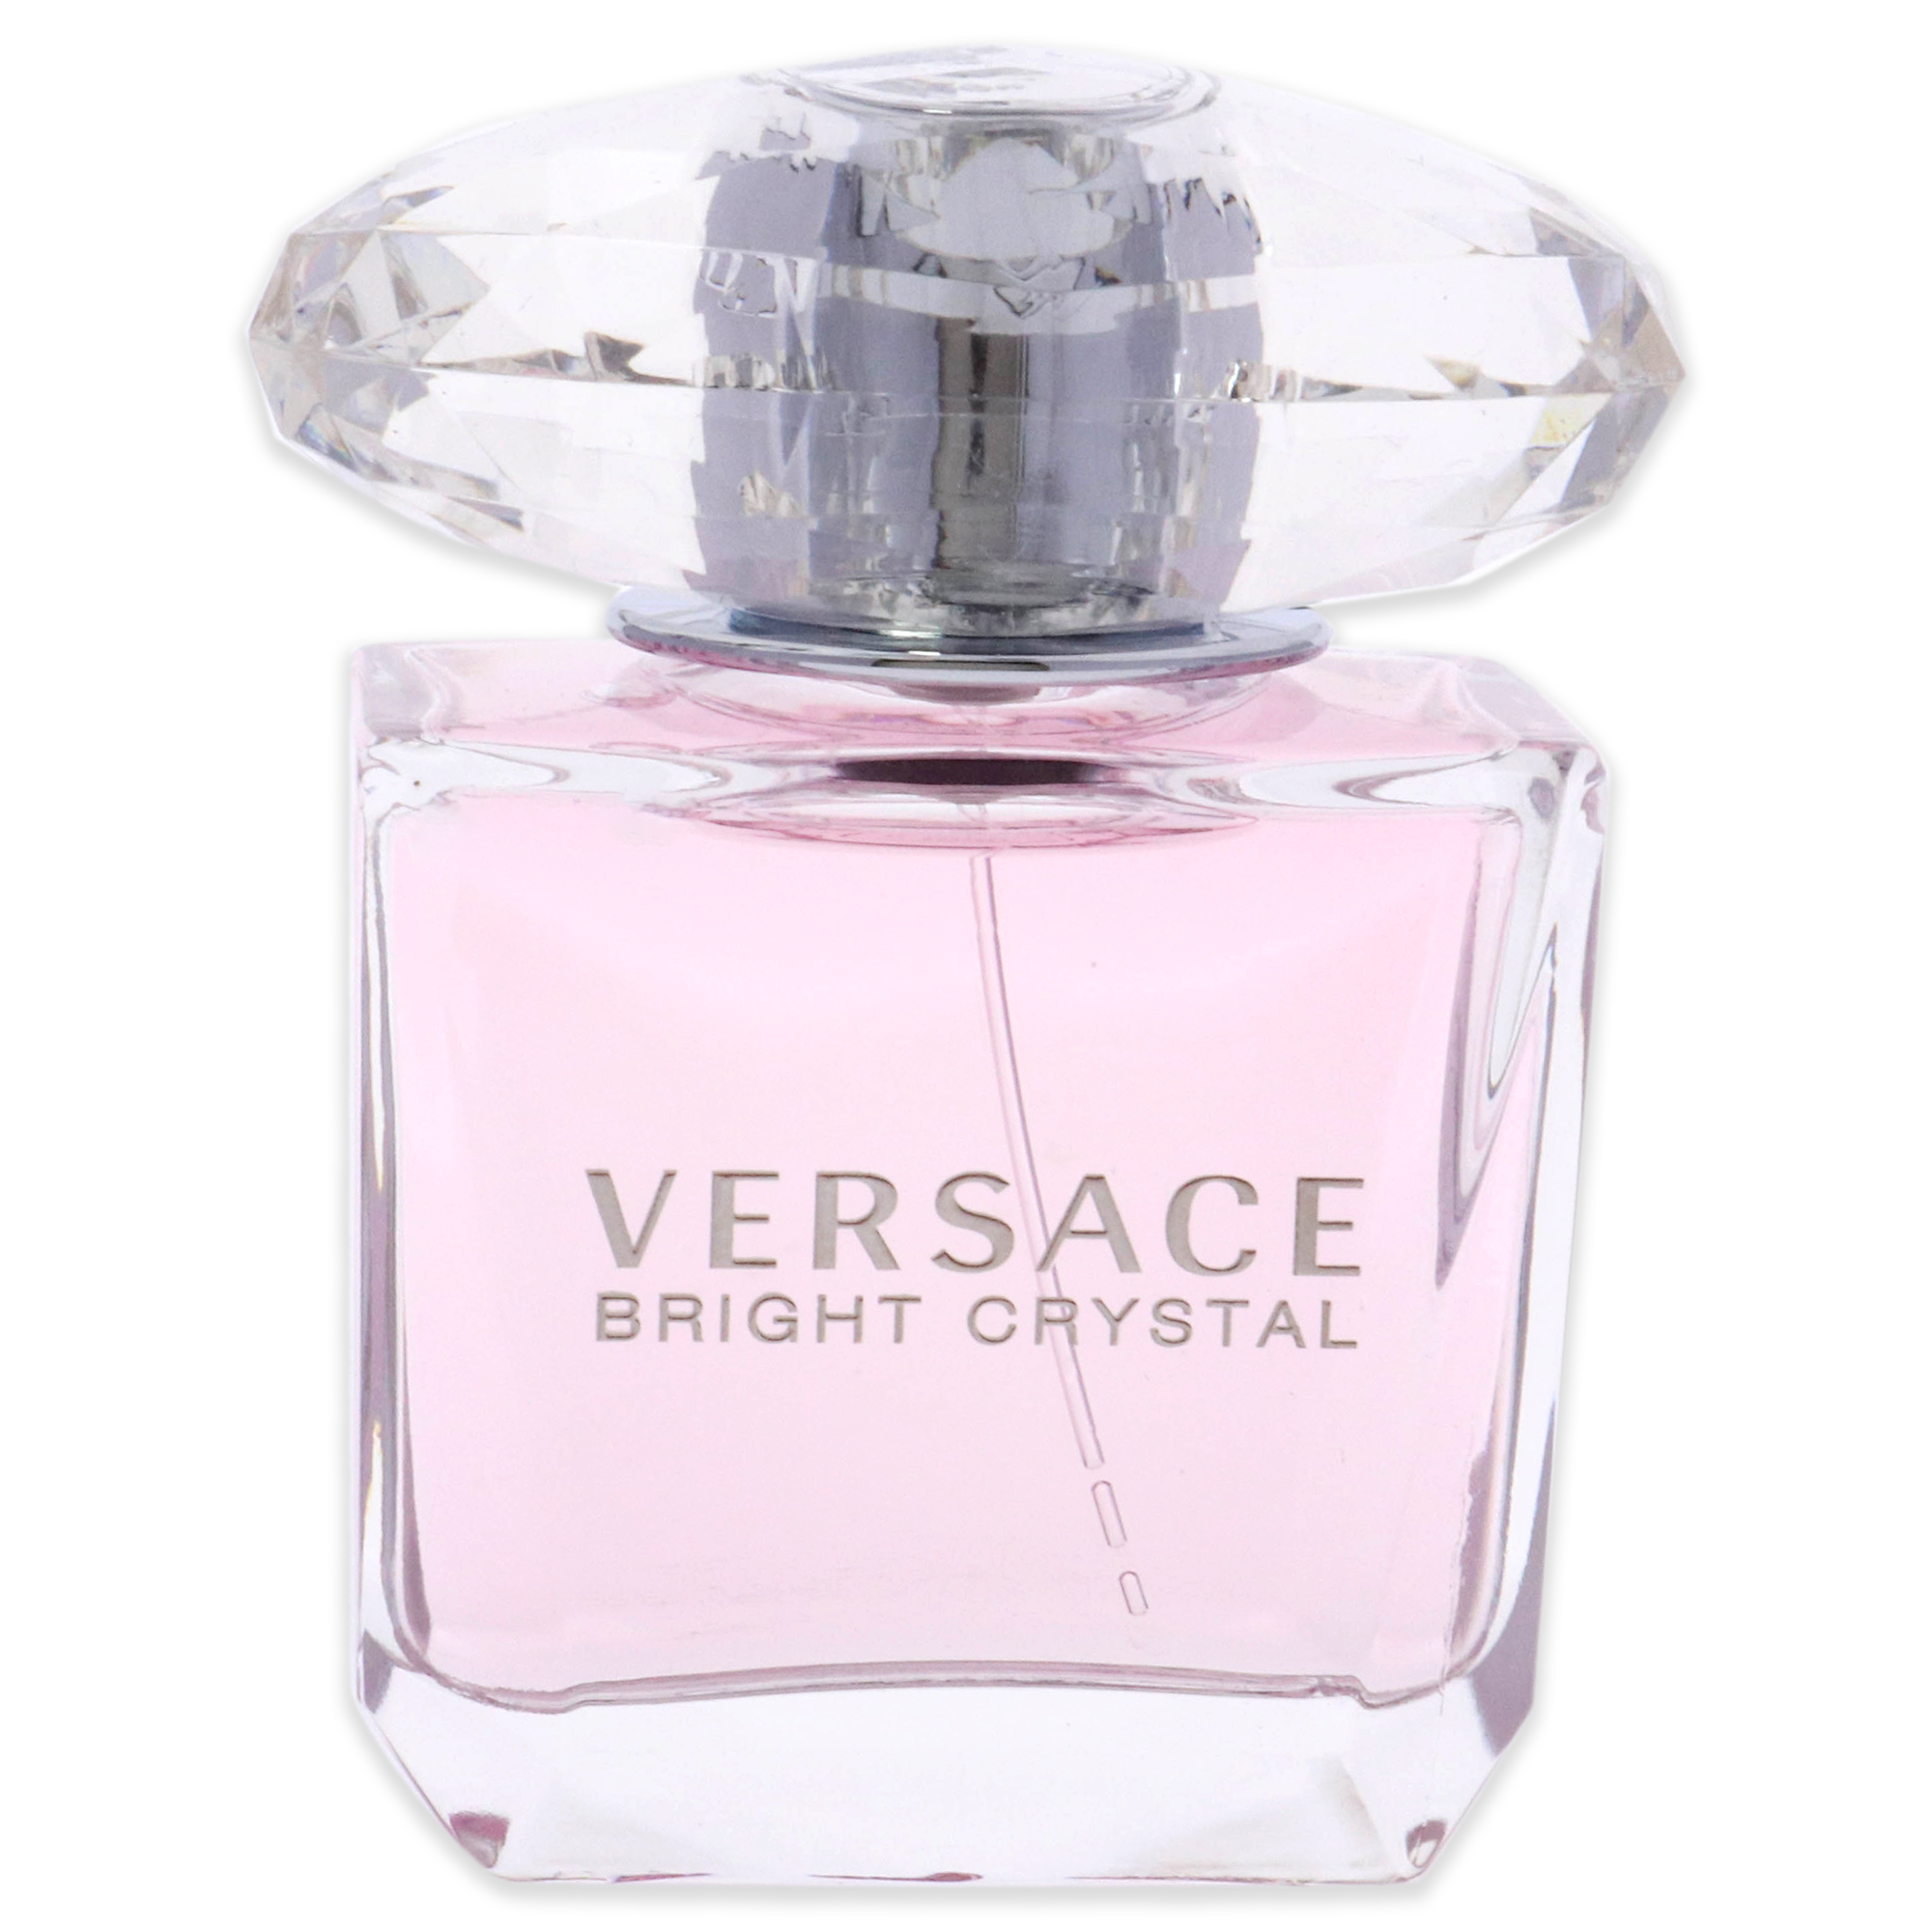 Bright Crystal by Versace Eau De Toilette Spray 1 oz for Women - image 2 of 6